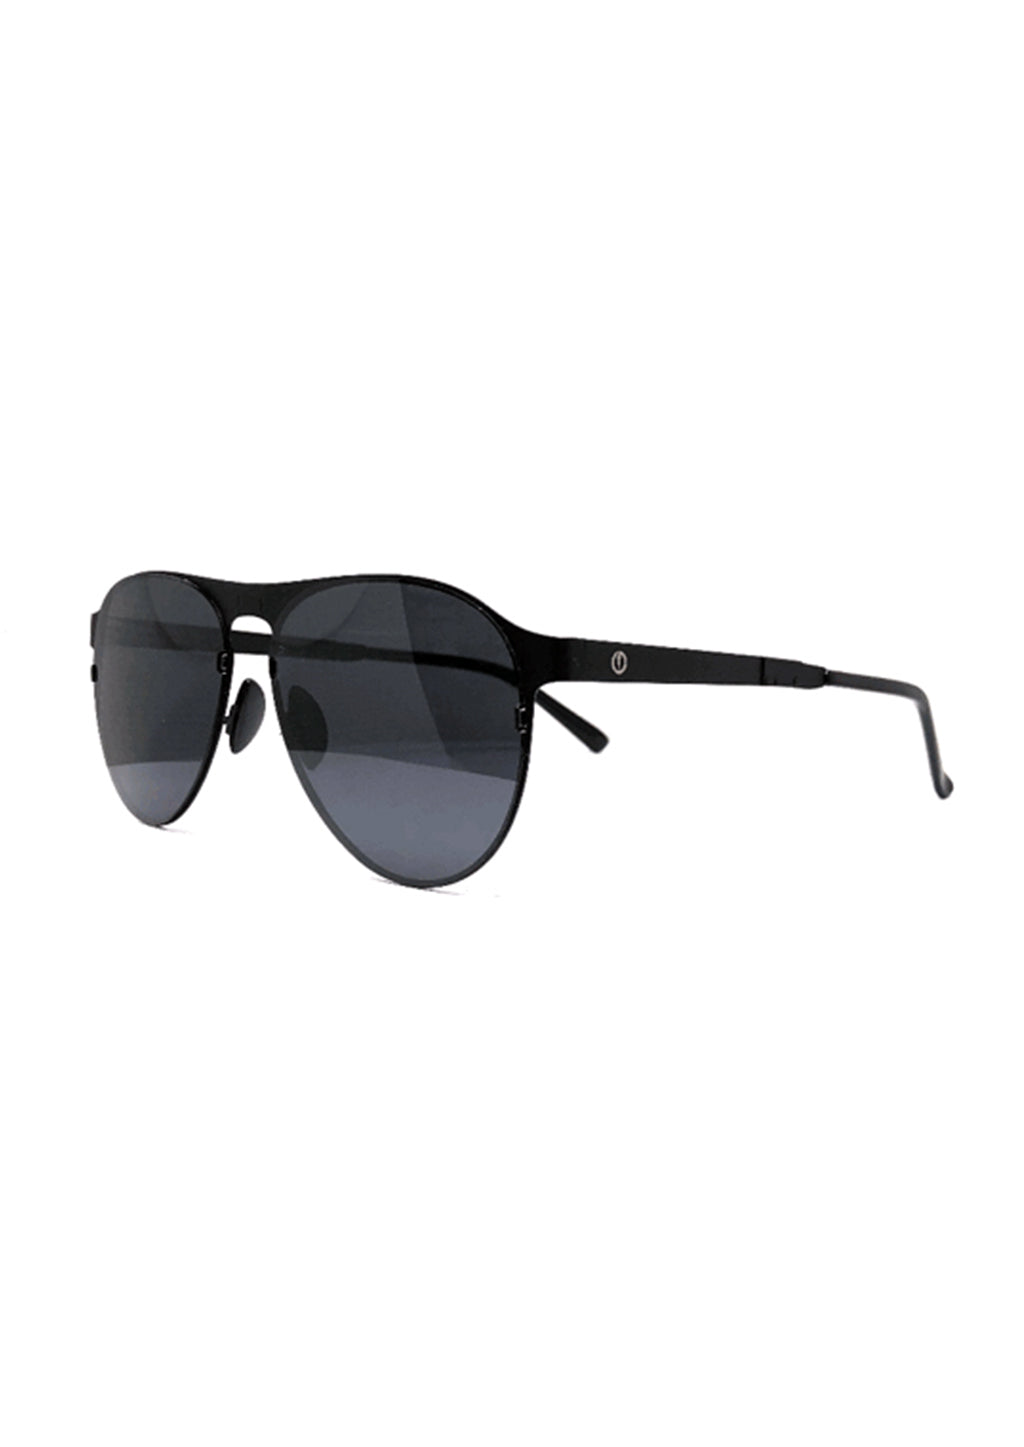 Foldable sunglasses - Scout classic aviator design - Side photo